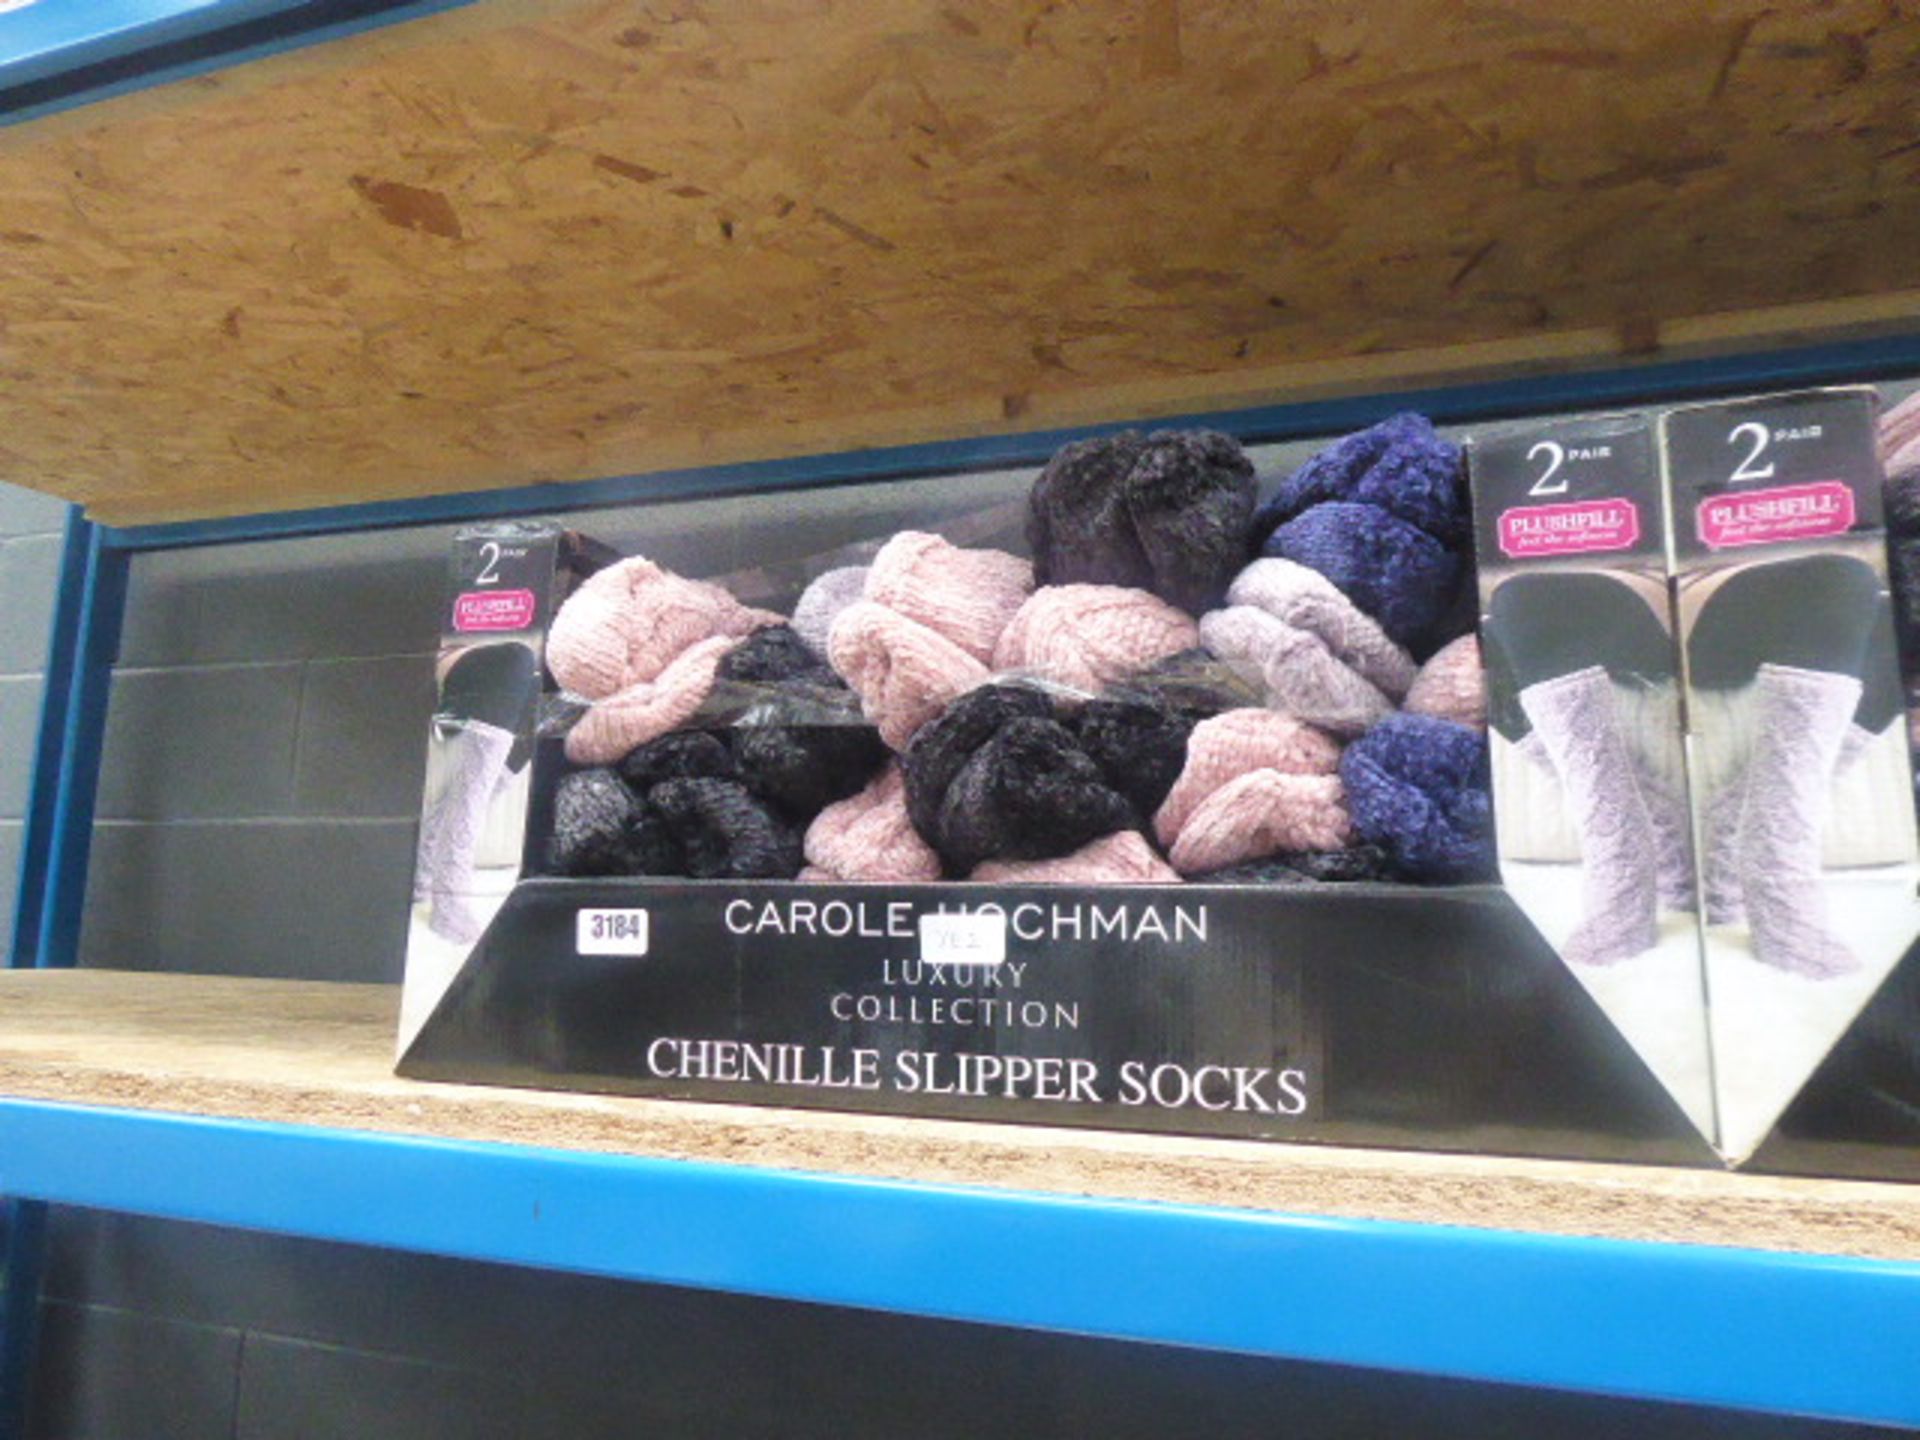 Tray of Carole Hotchman slipper socks